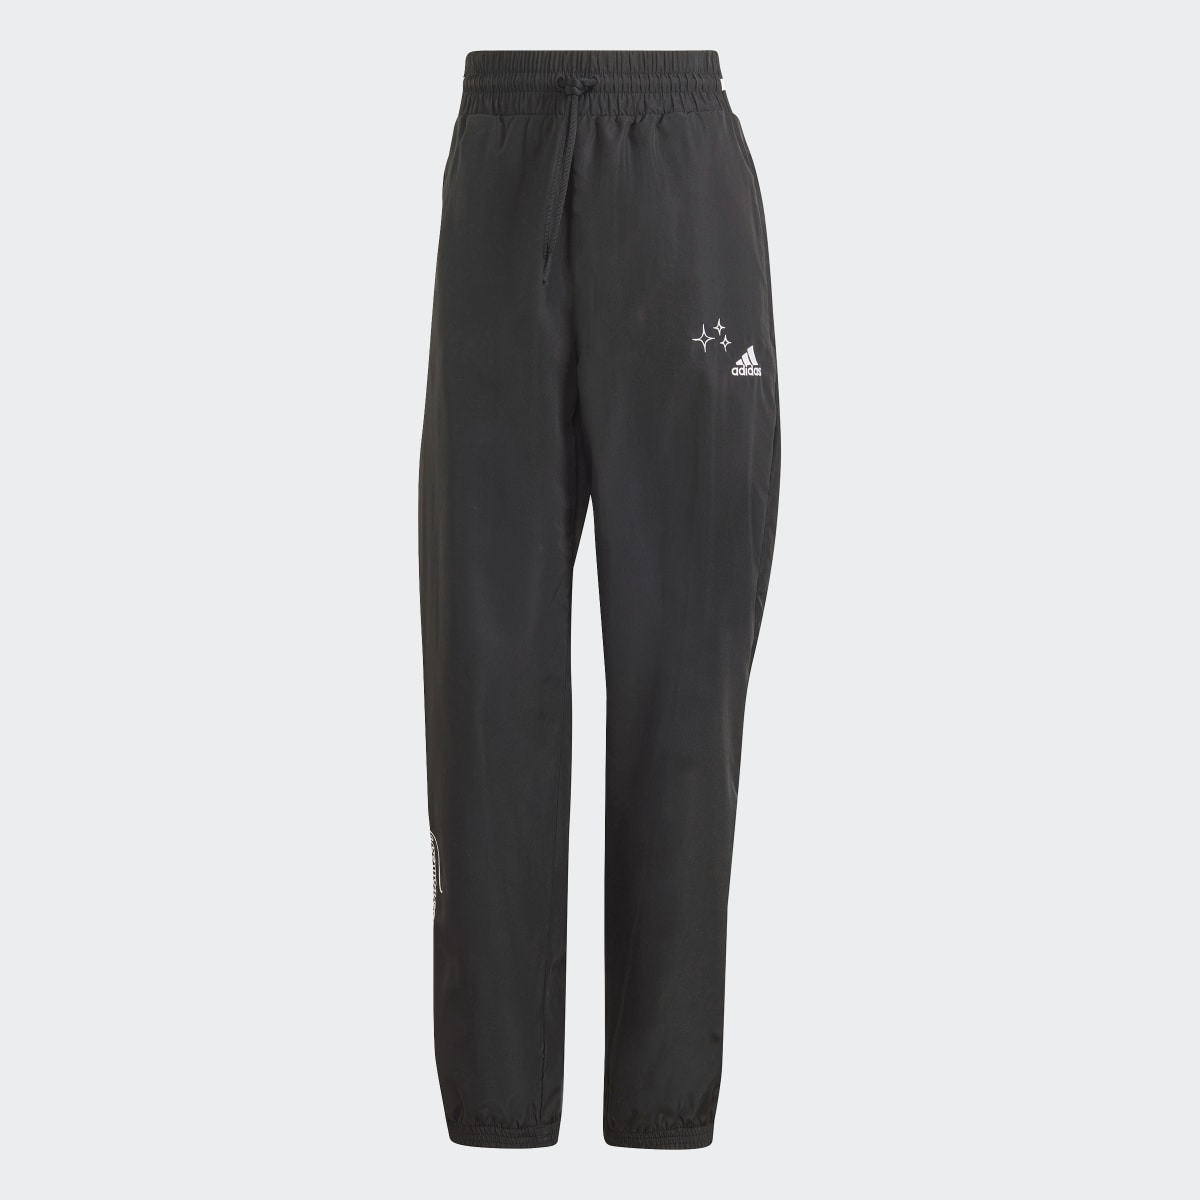 Adidas Scribble Woven Pants. 4